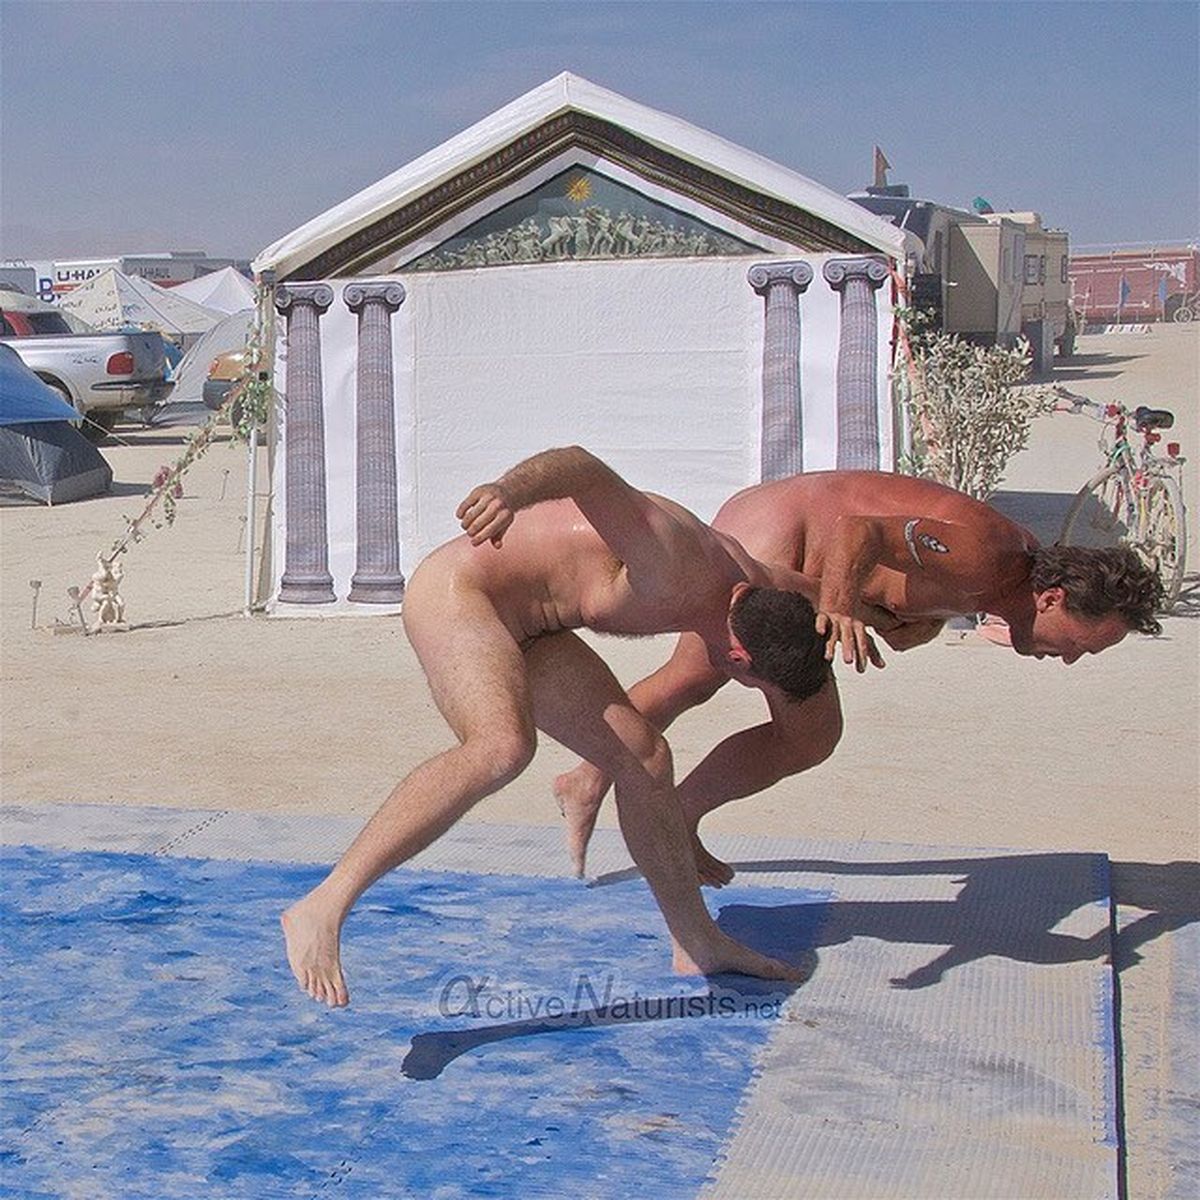 https://www.nudismlife.com/galleries/public_nudity/burning_man/active_naturists/active_naturists_009.jpg